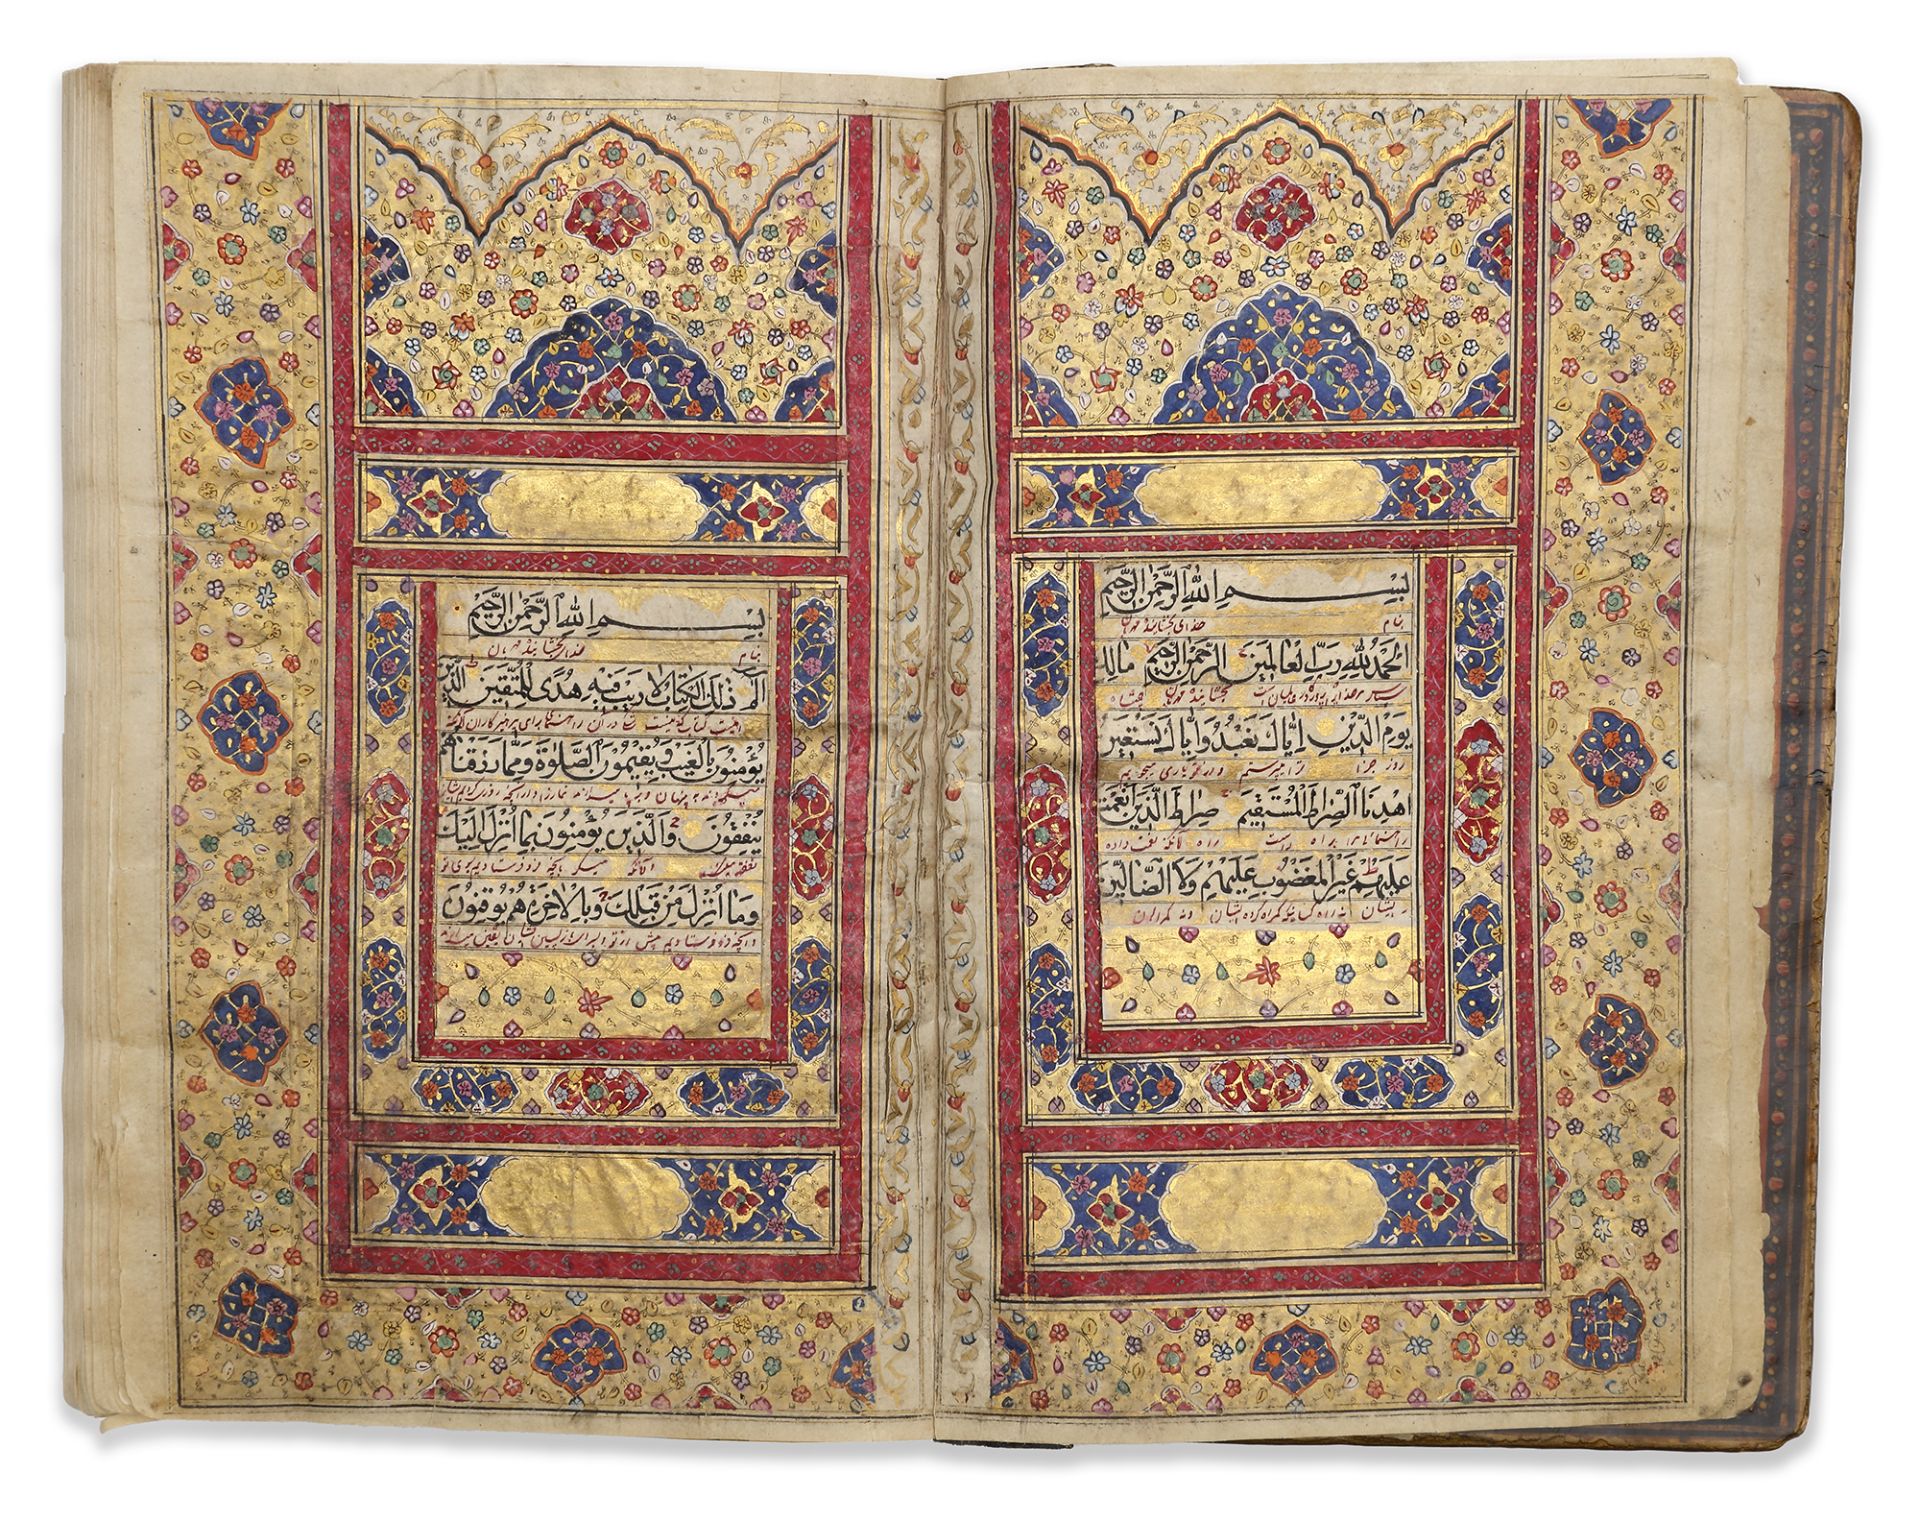 A FINELY ILLUMINATED QAJAR QURAN SIGNED BY ABDULLAH IBN ASHUR AL-ISFAHANI IN 1204 AH/1789 AD